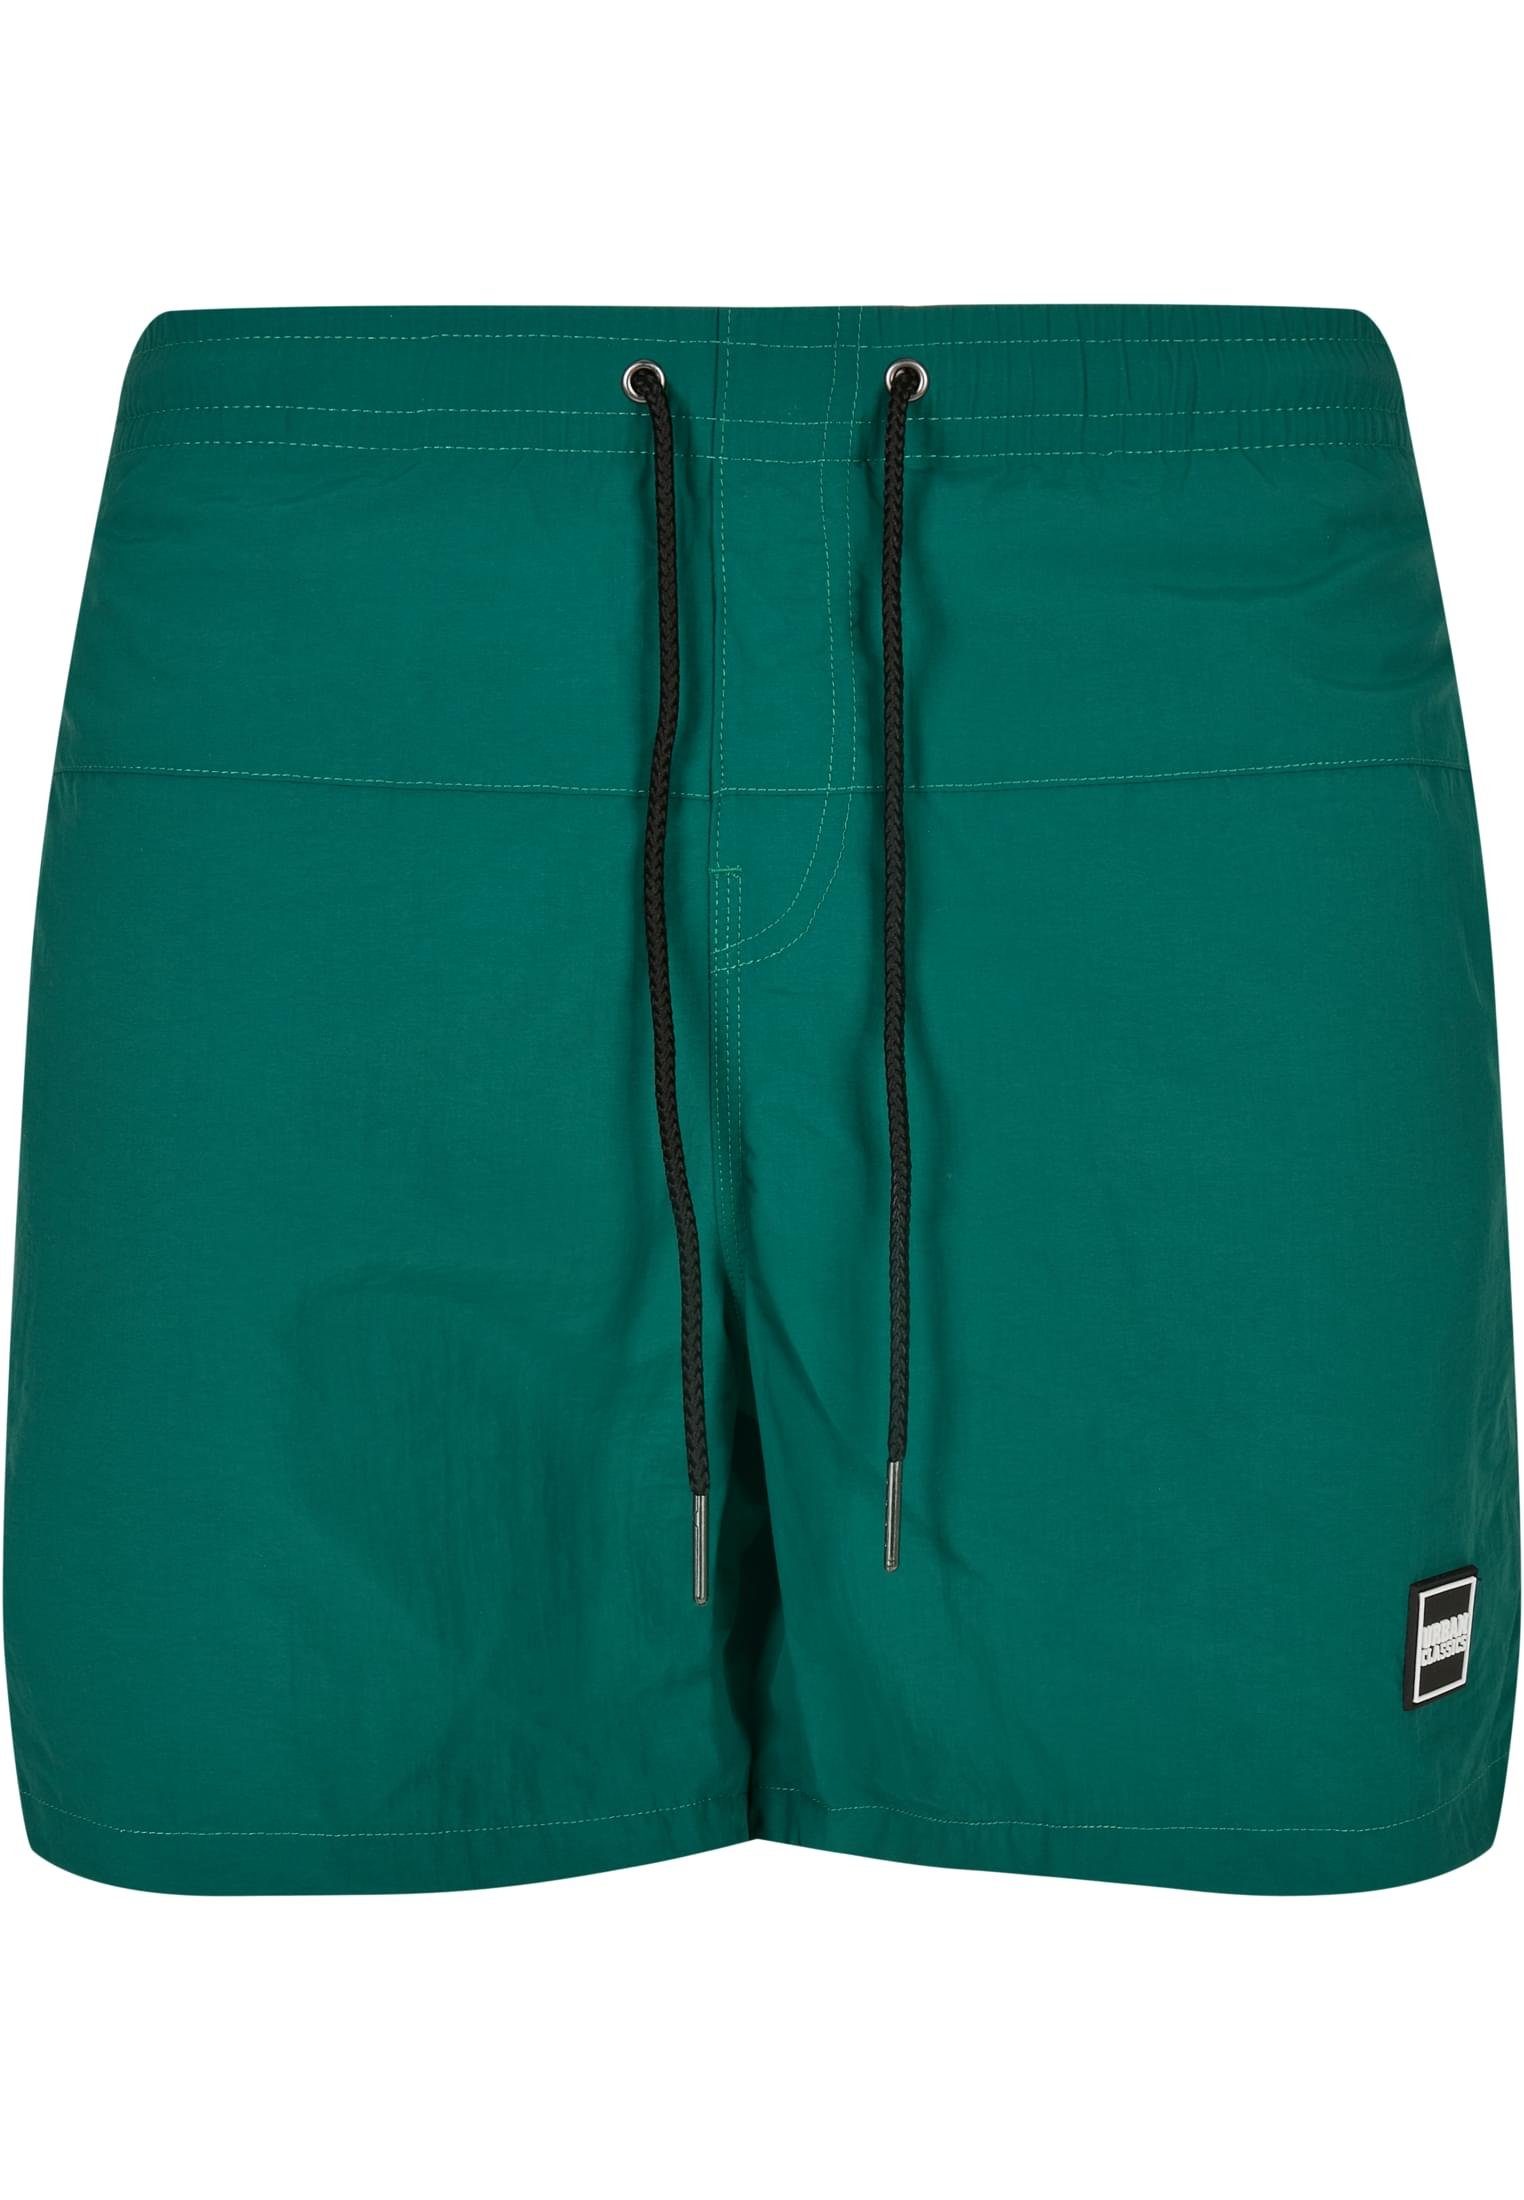 URBAN CLASSICS Badeshorts Herren Swim green Shorts